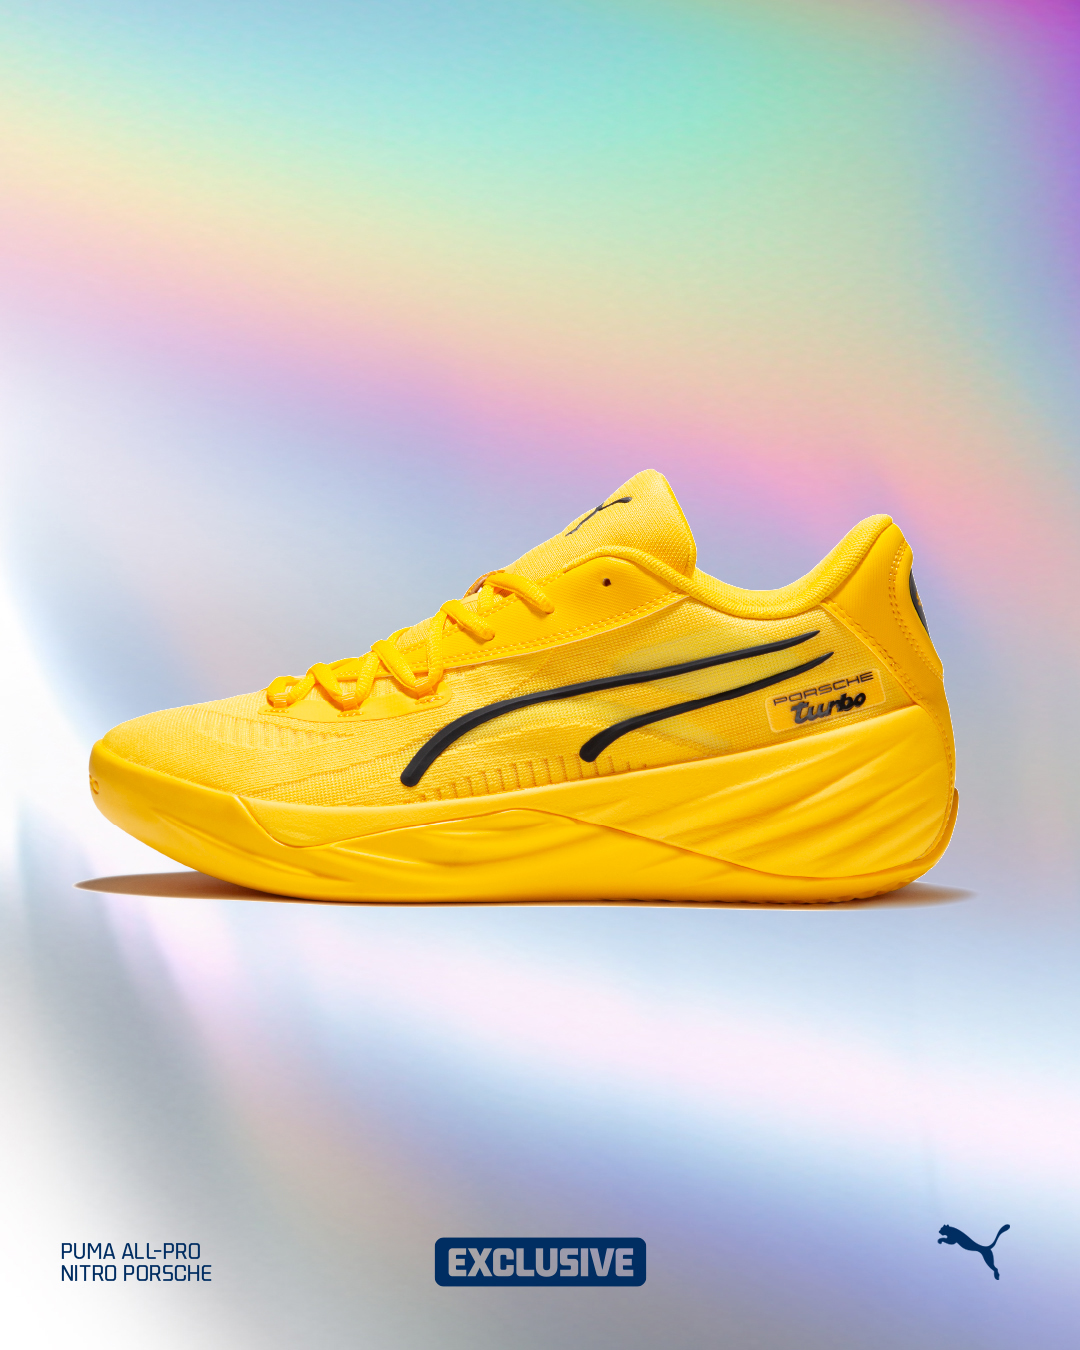 Puma-All-Pro-Nitro-Porsche-Basketball-Shoes-2